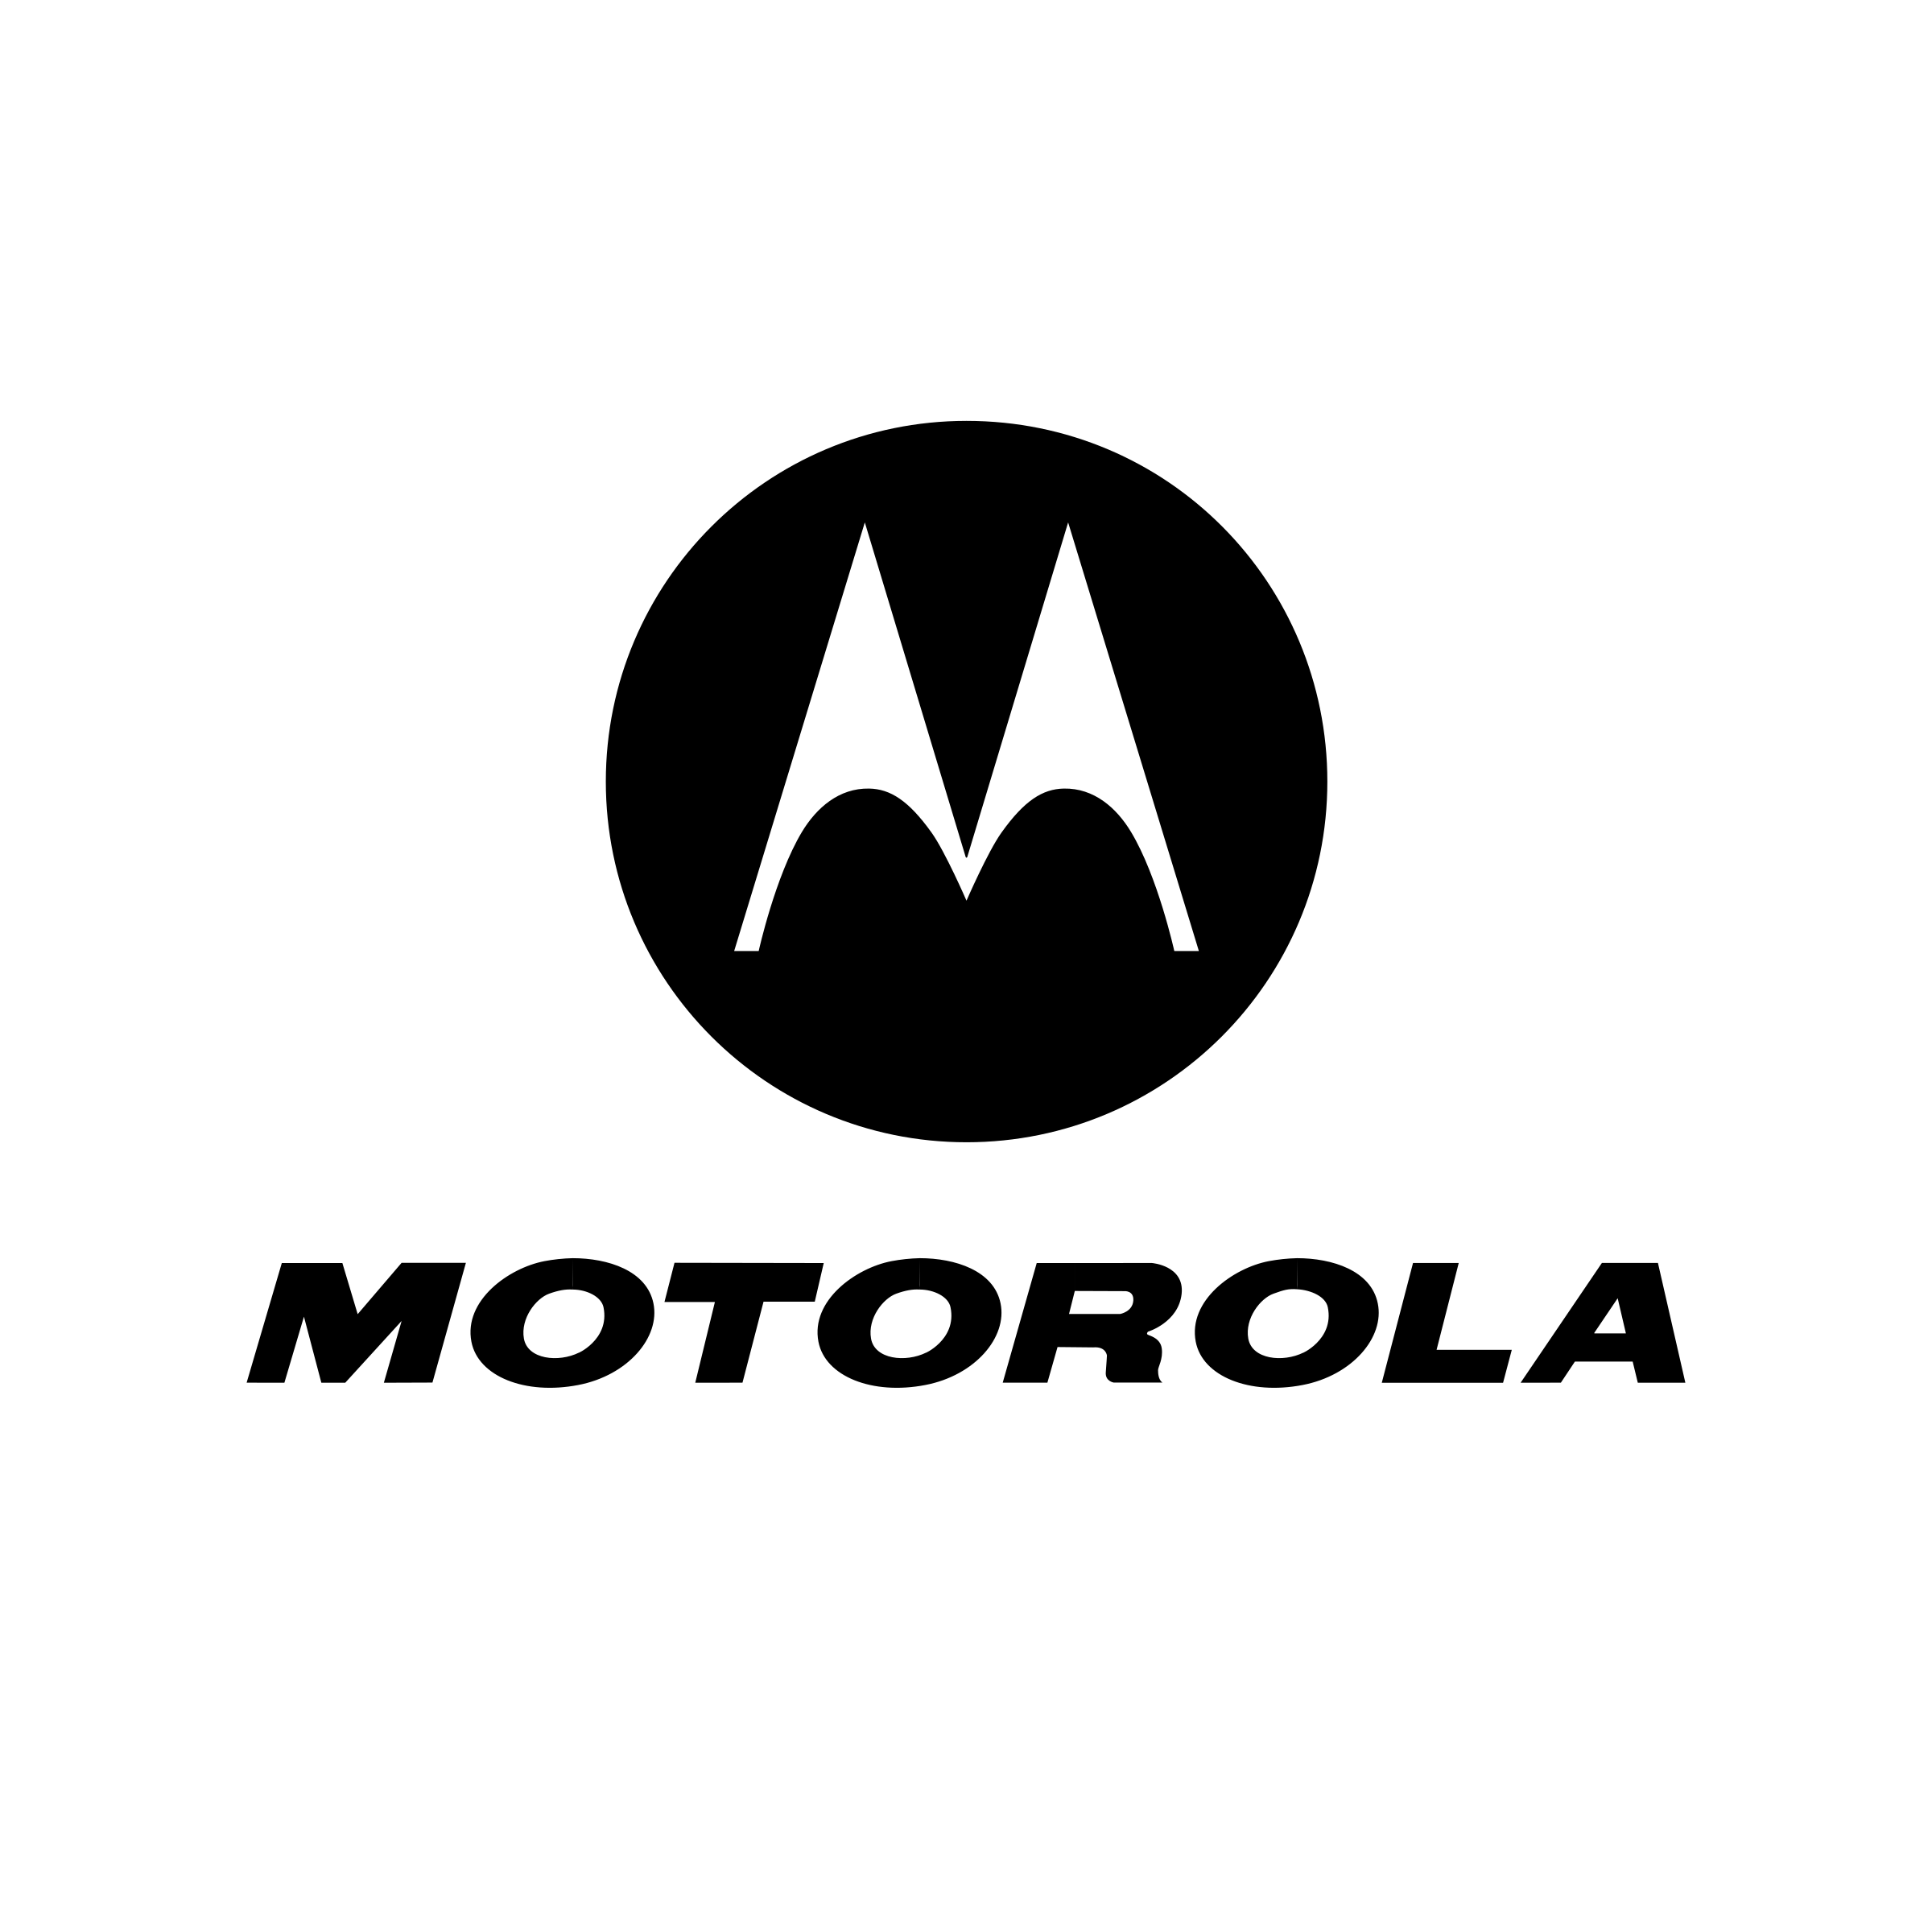 Motorola Logo - Motorola Logo PNG Transparent & SVG Vector